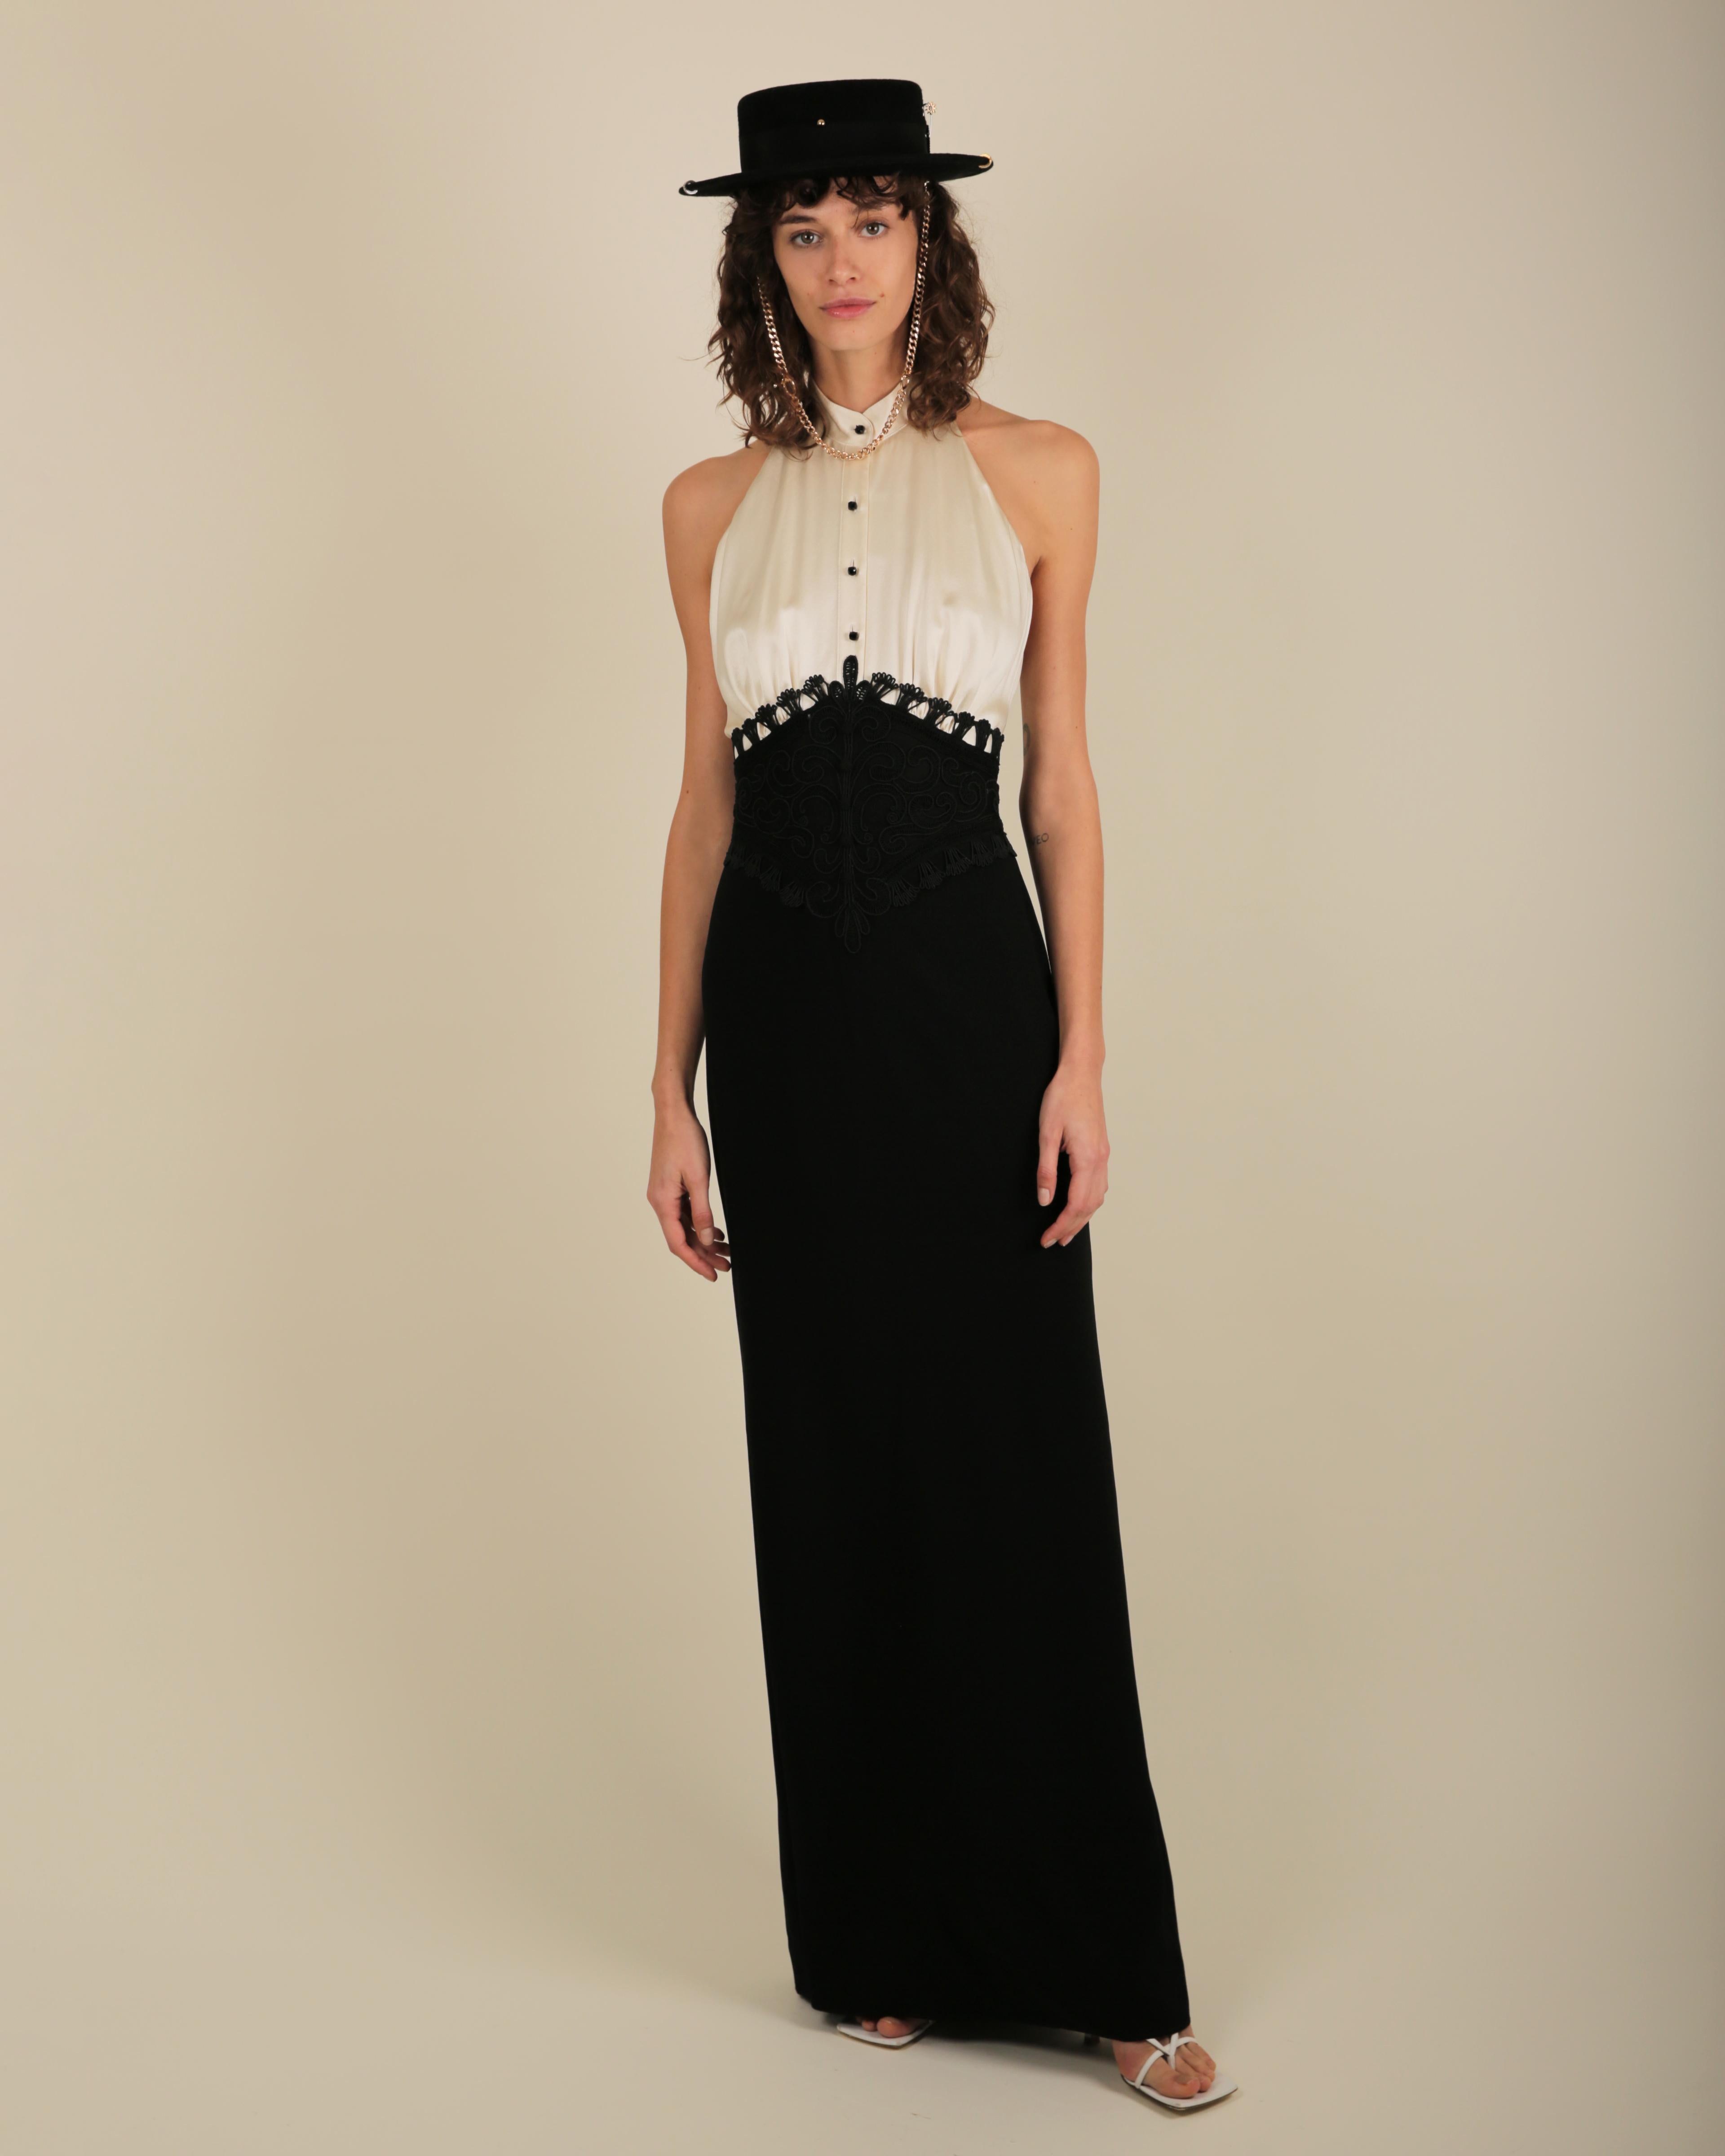 Ralph Lauren SS 2013 black white sleeveless halter backless button up dress gown For Sale 2